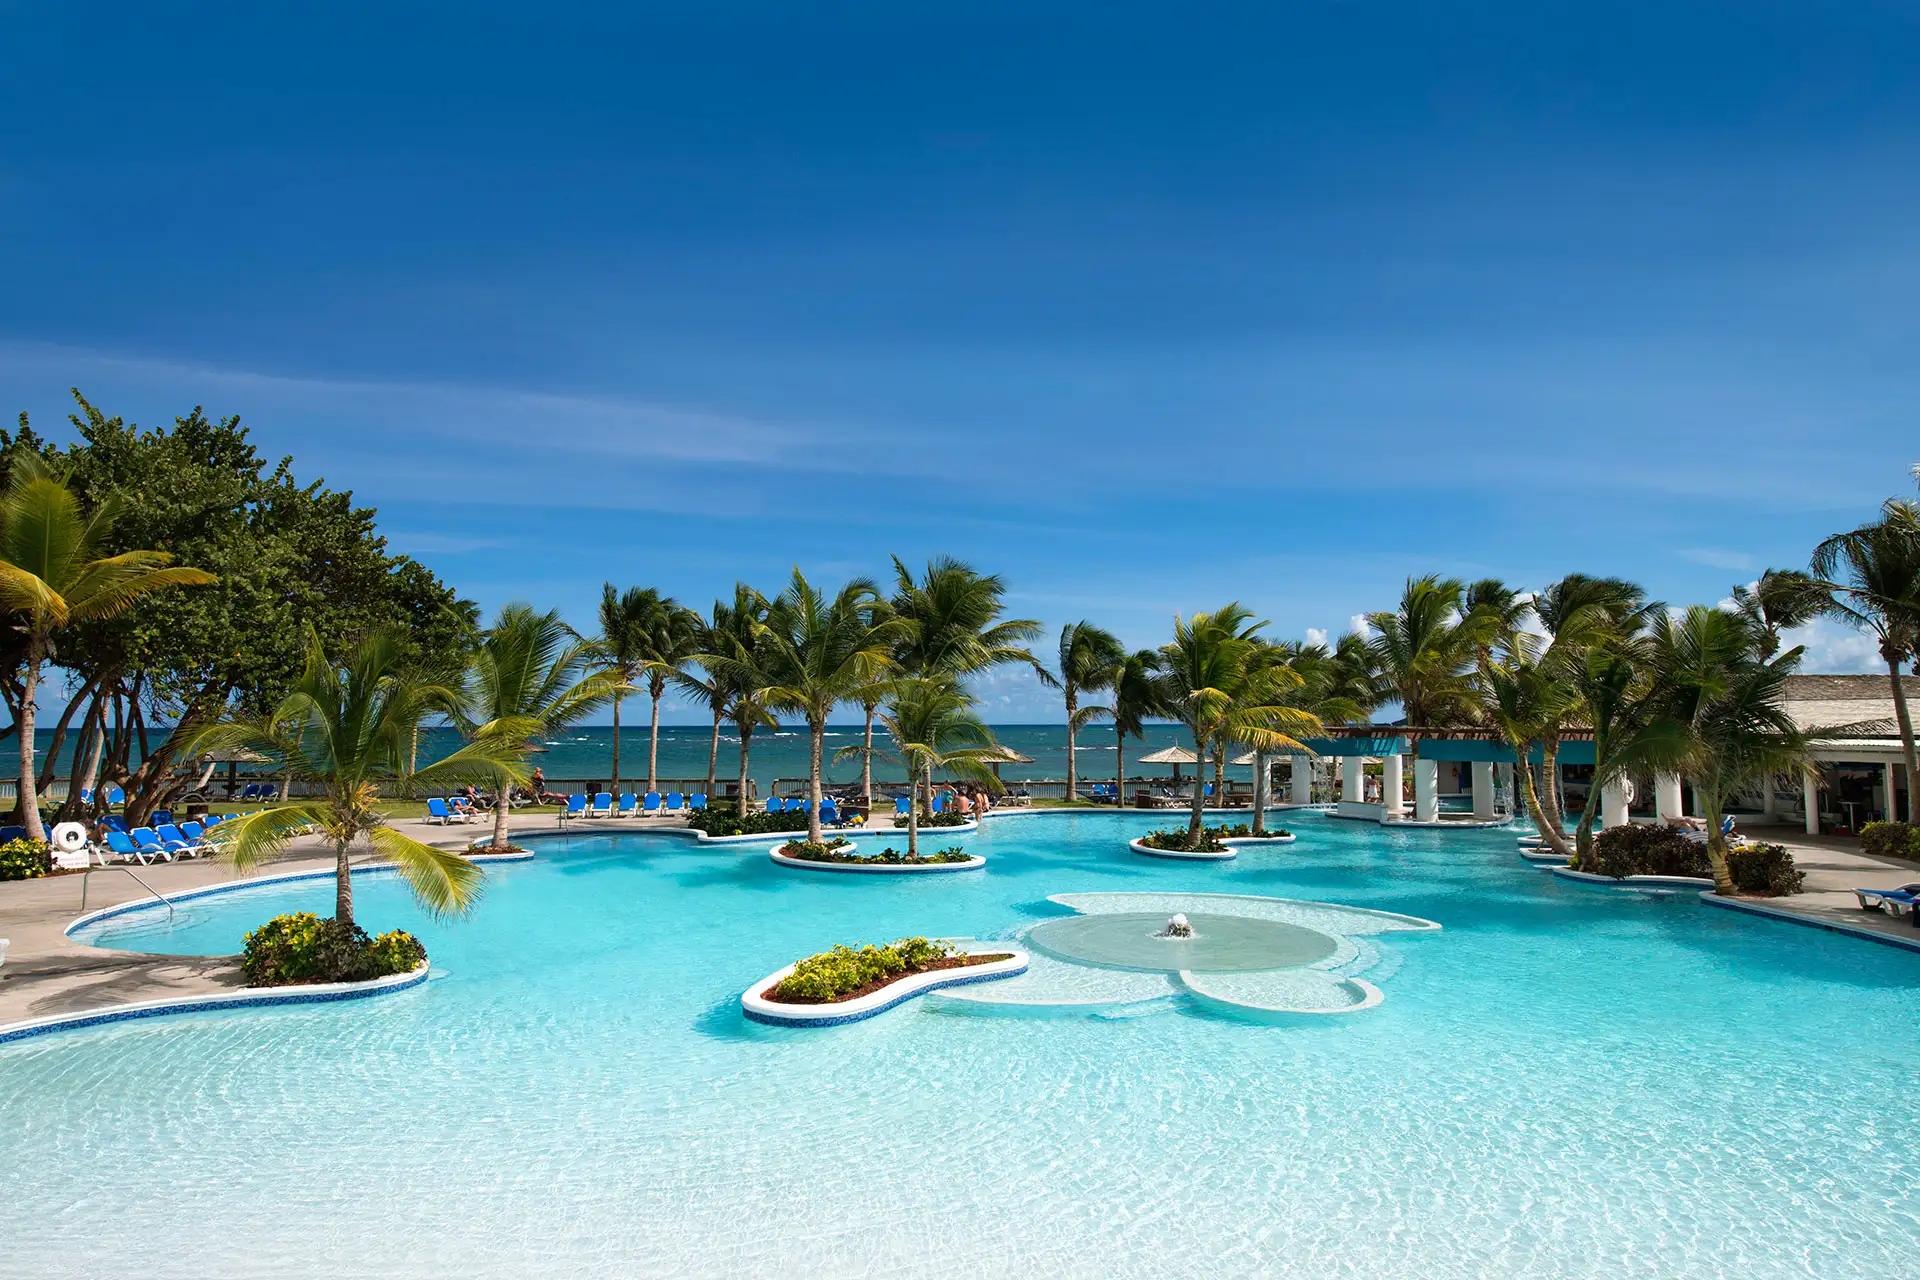 Pools at Coconut Bay Beach Resort & Spa; Courtesy of Coconut Bay Beach Resort & Spa